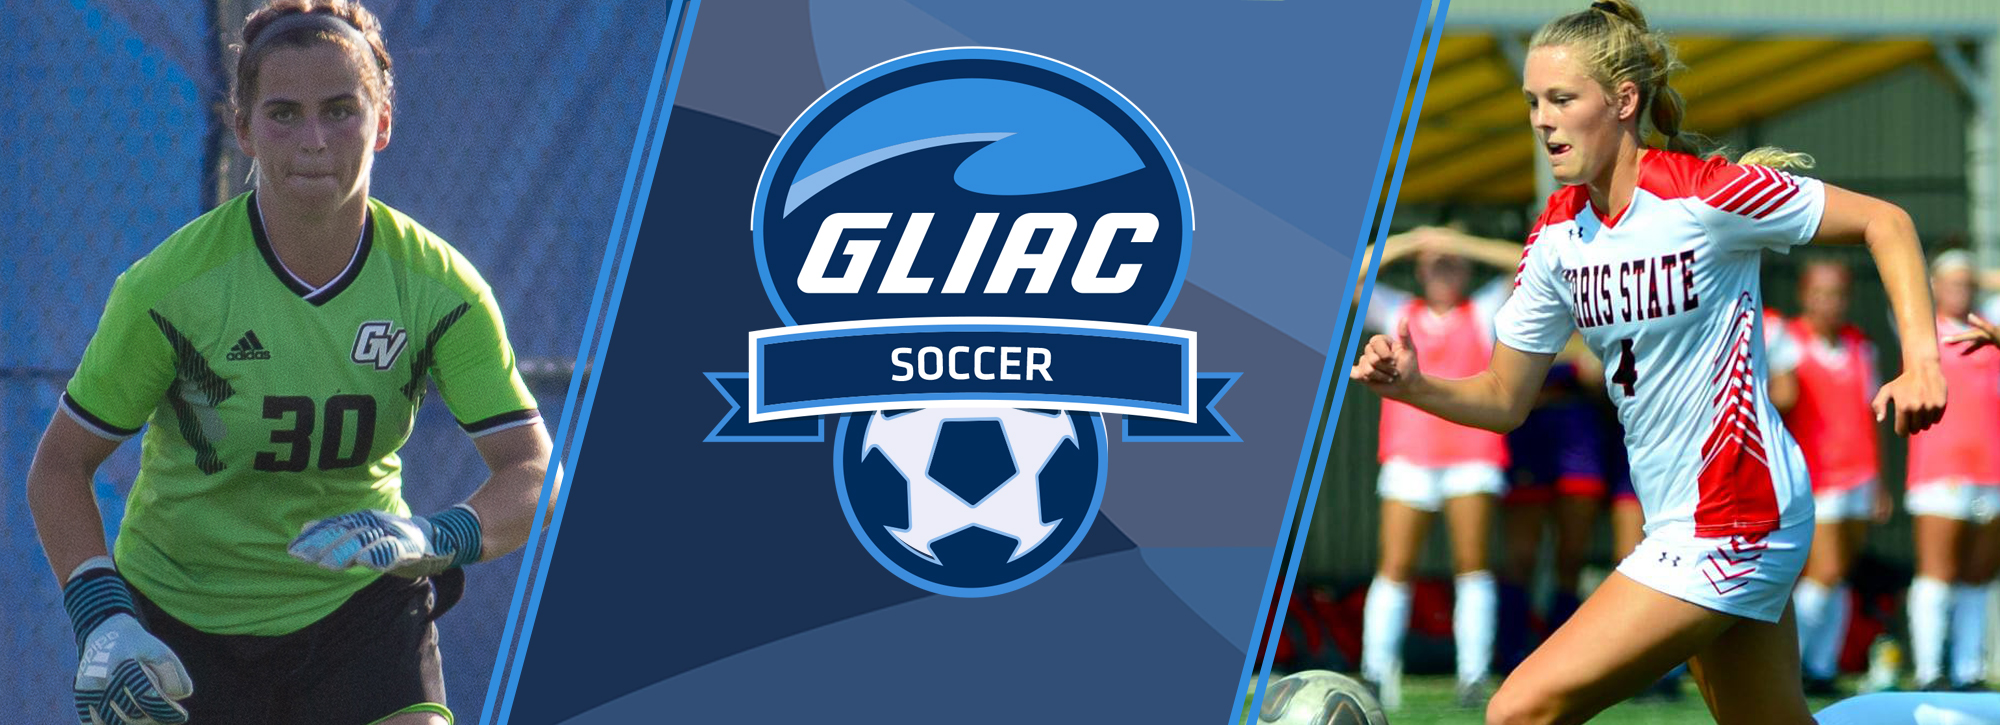 FSU's VerHage and GVSU Rich are named GLIAC women's soccer players of the week